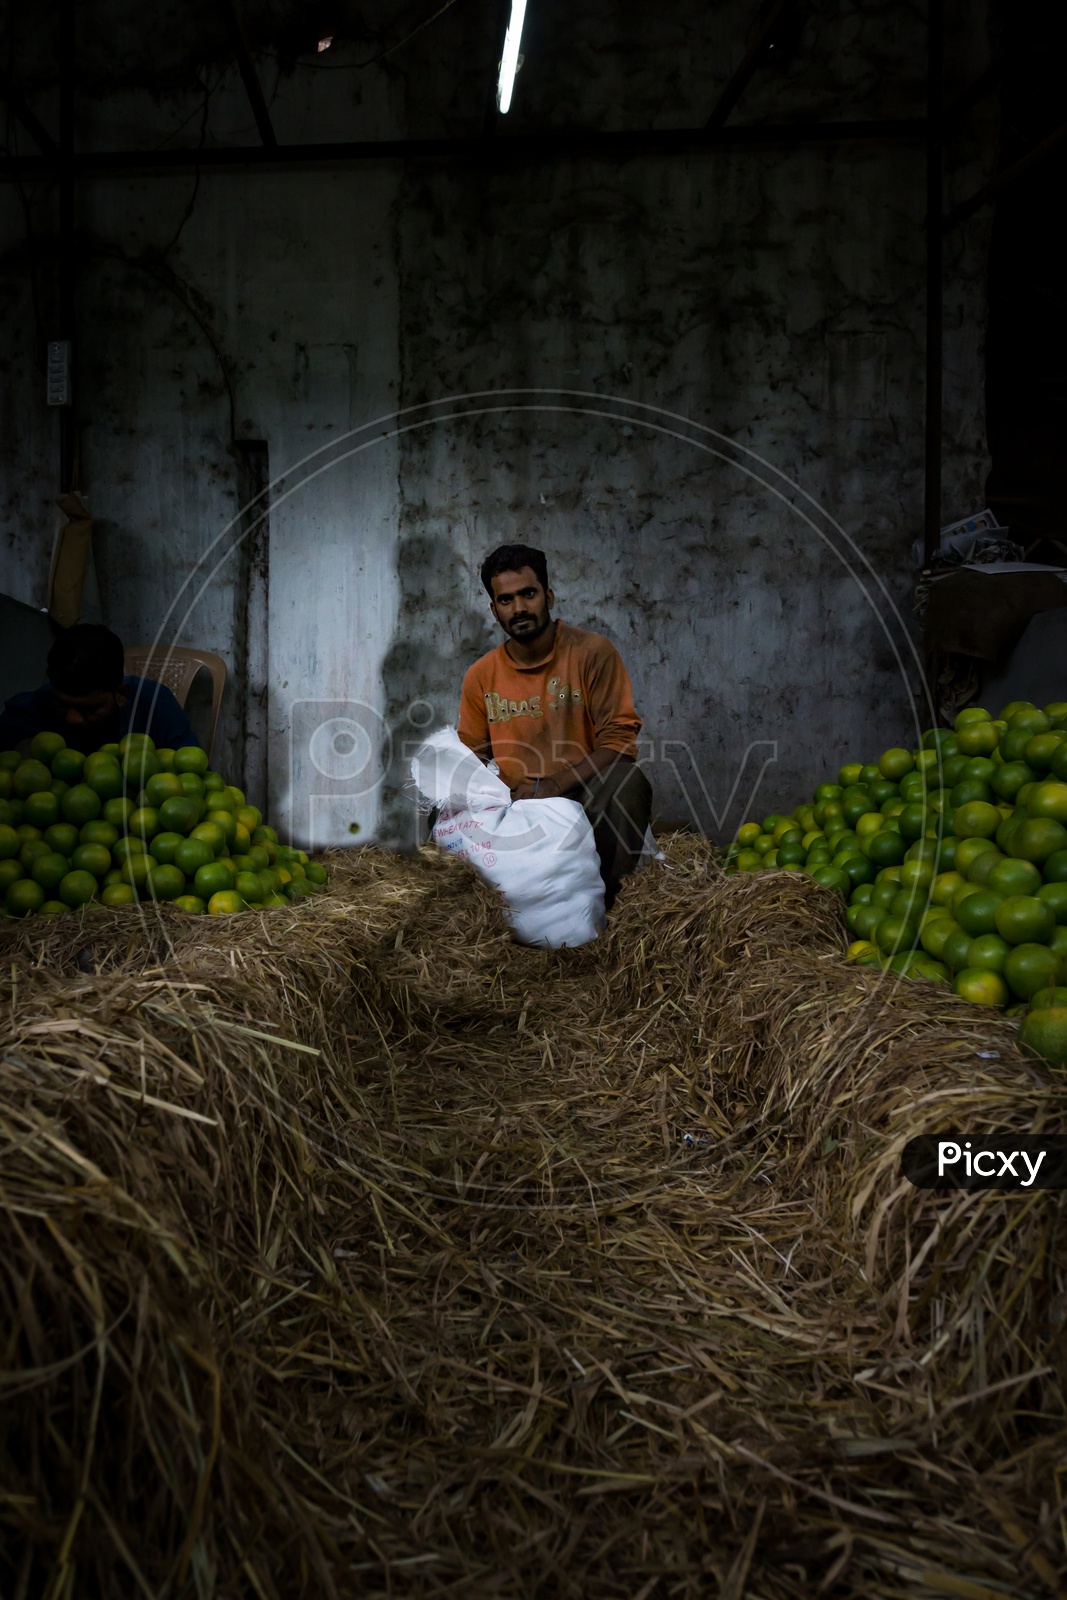 A mango seller in the market